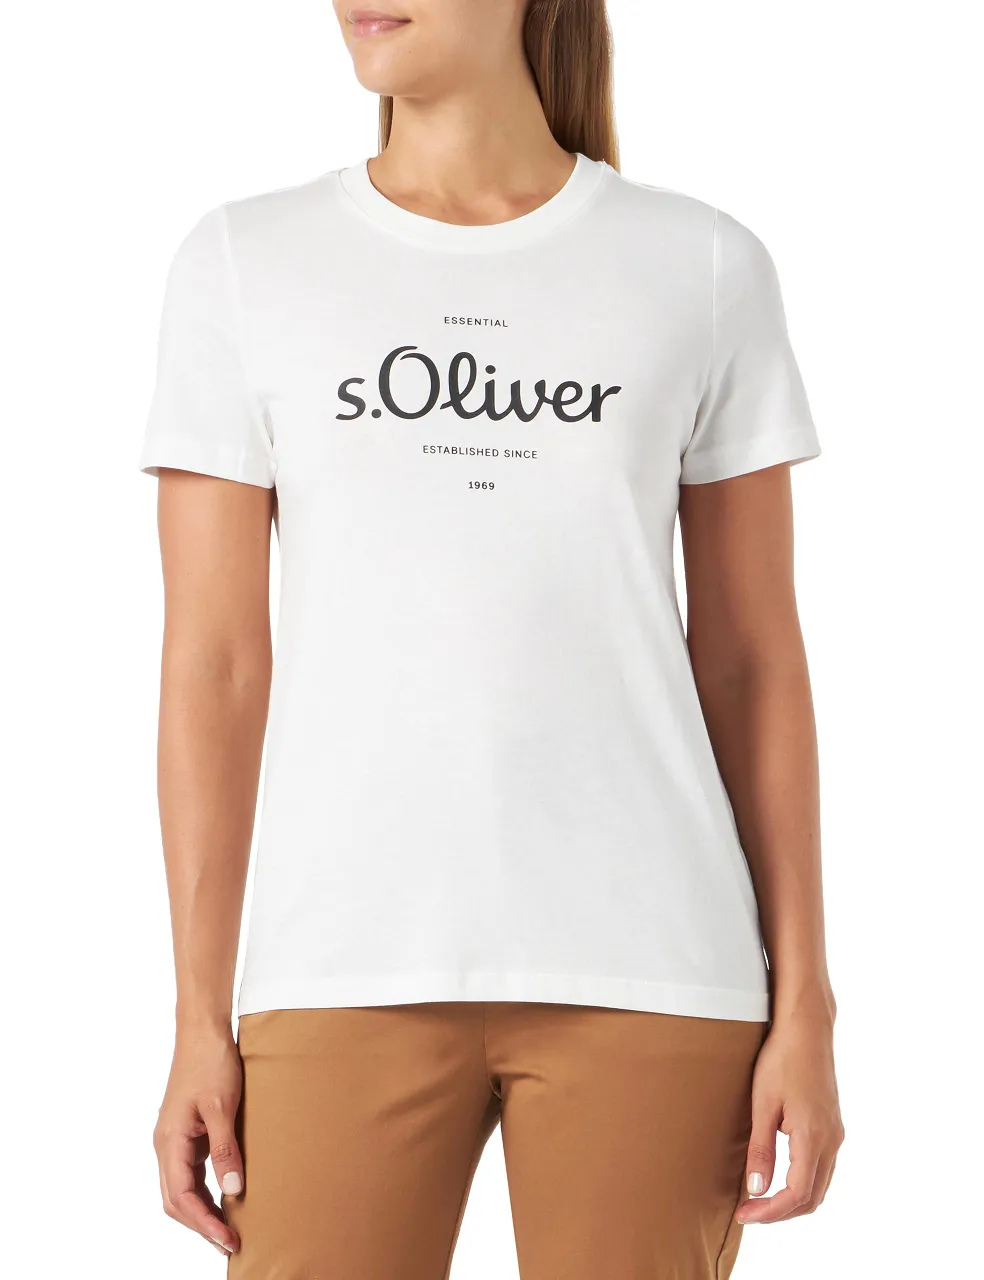 s.Oliver Damen 2136463 T-Shirt kurzarm